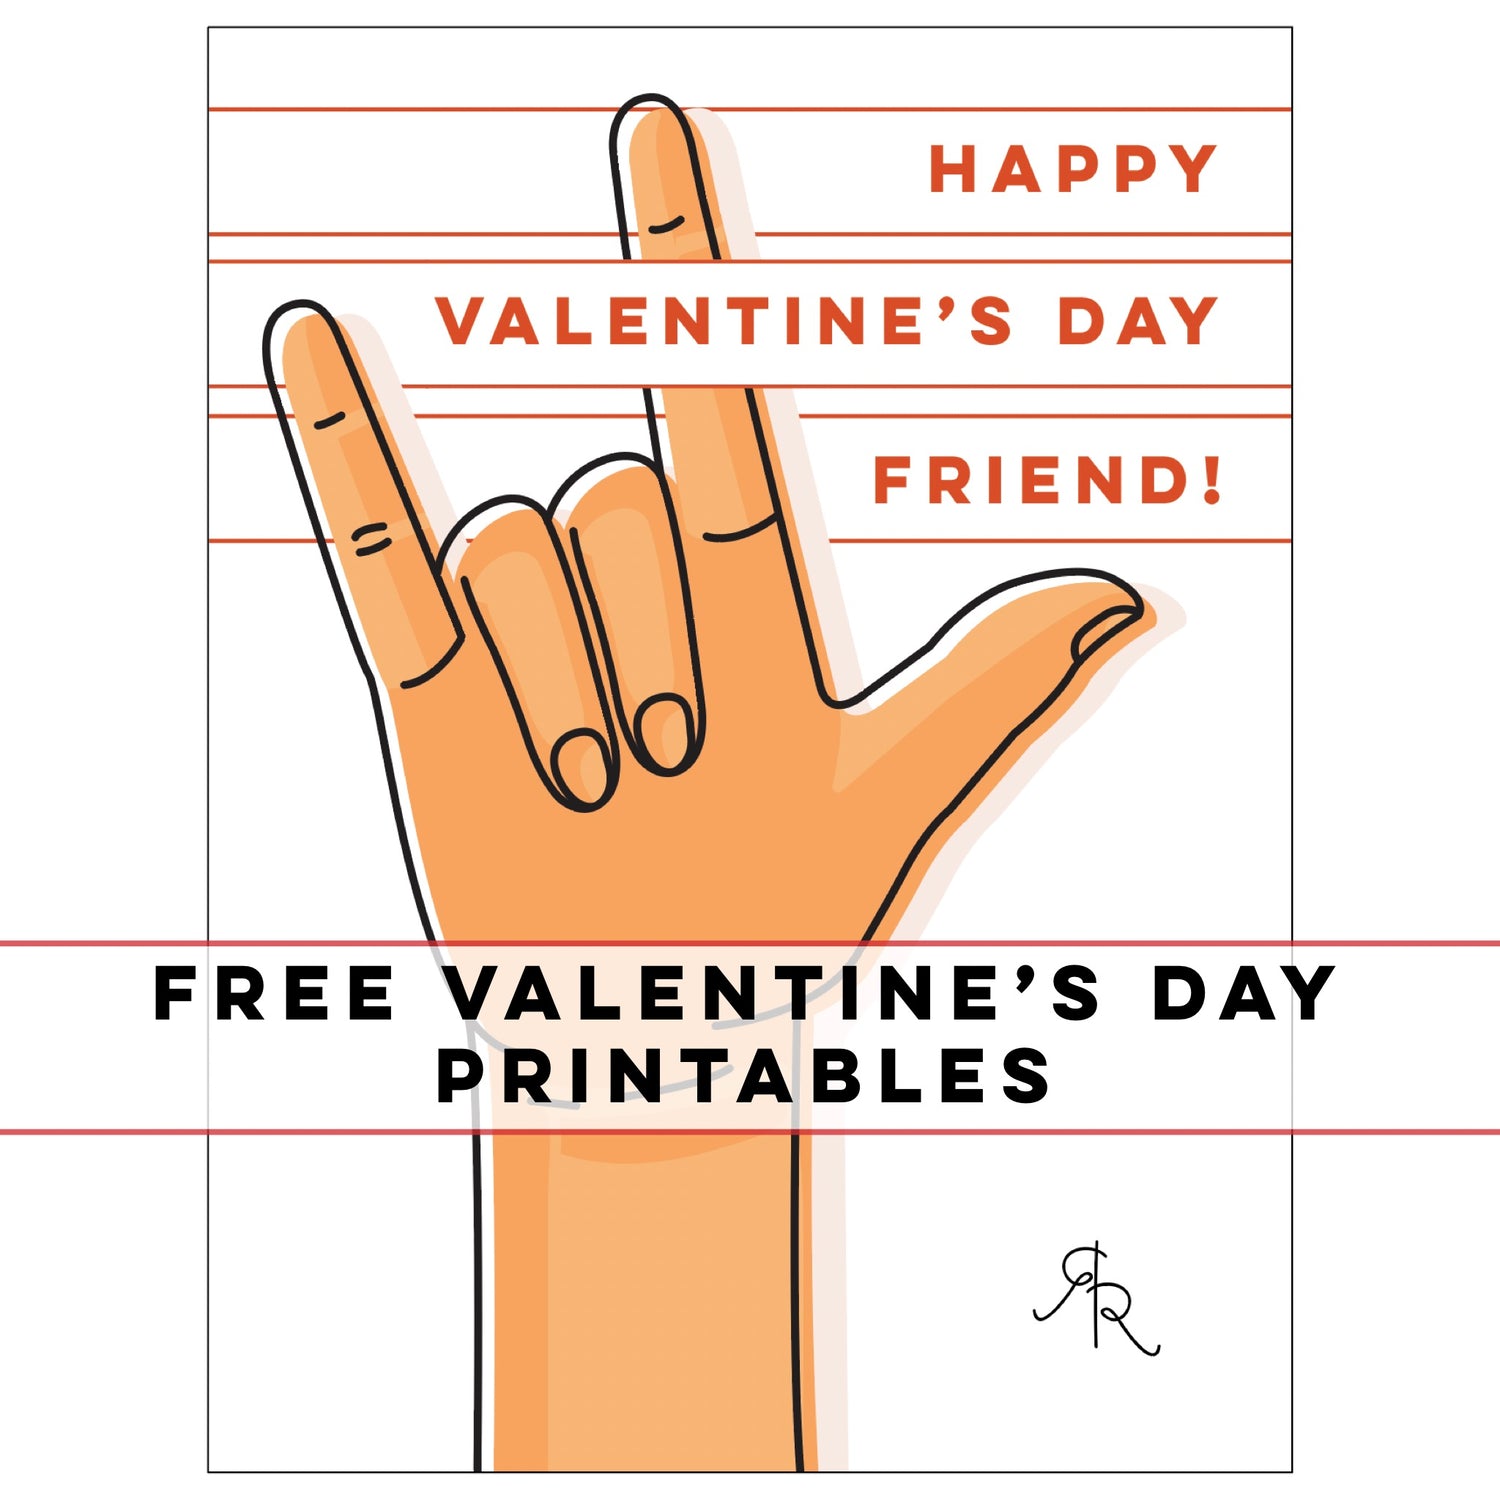 FREE Valentine's Day Printables - New